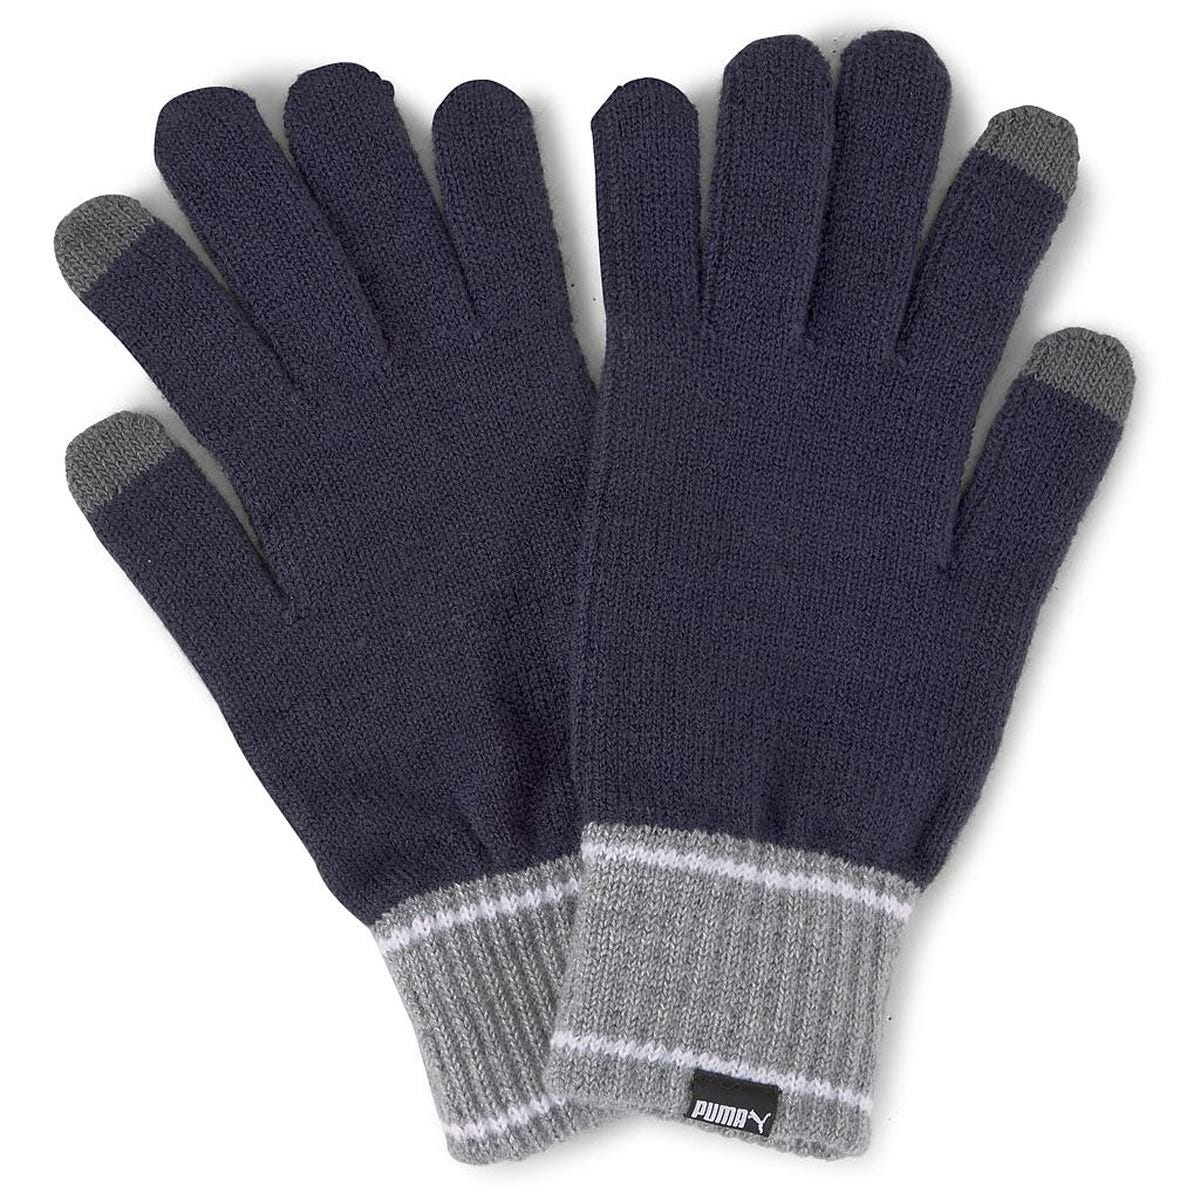 Puma Knit Gloves (pair) (large/Xlarge, Peacoat/Gray Heather)